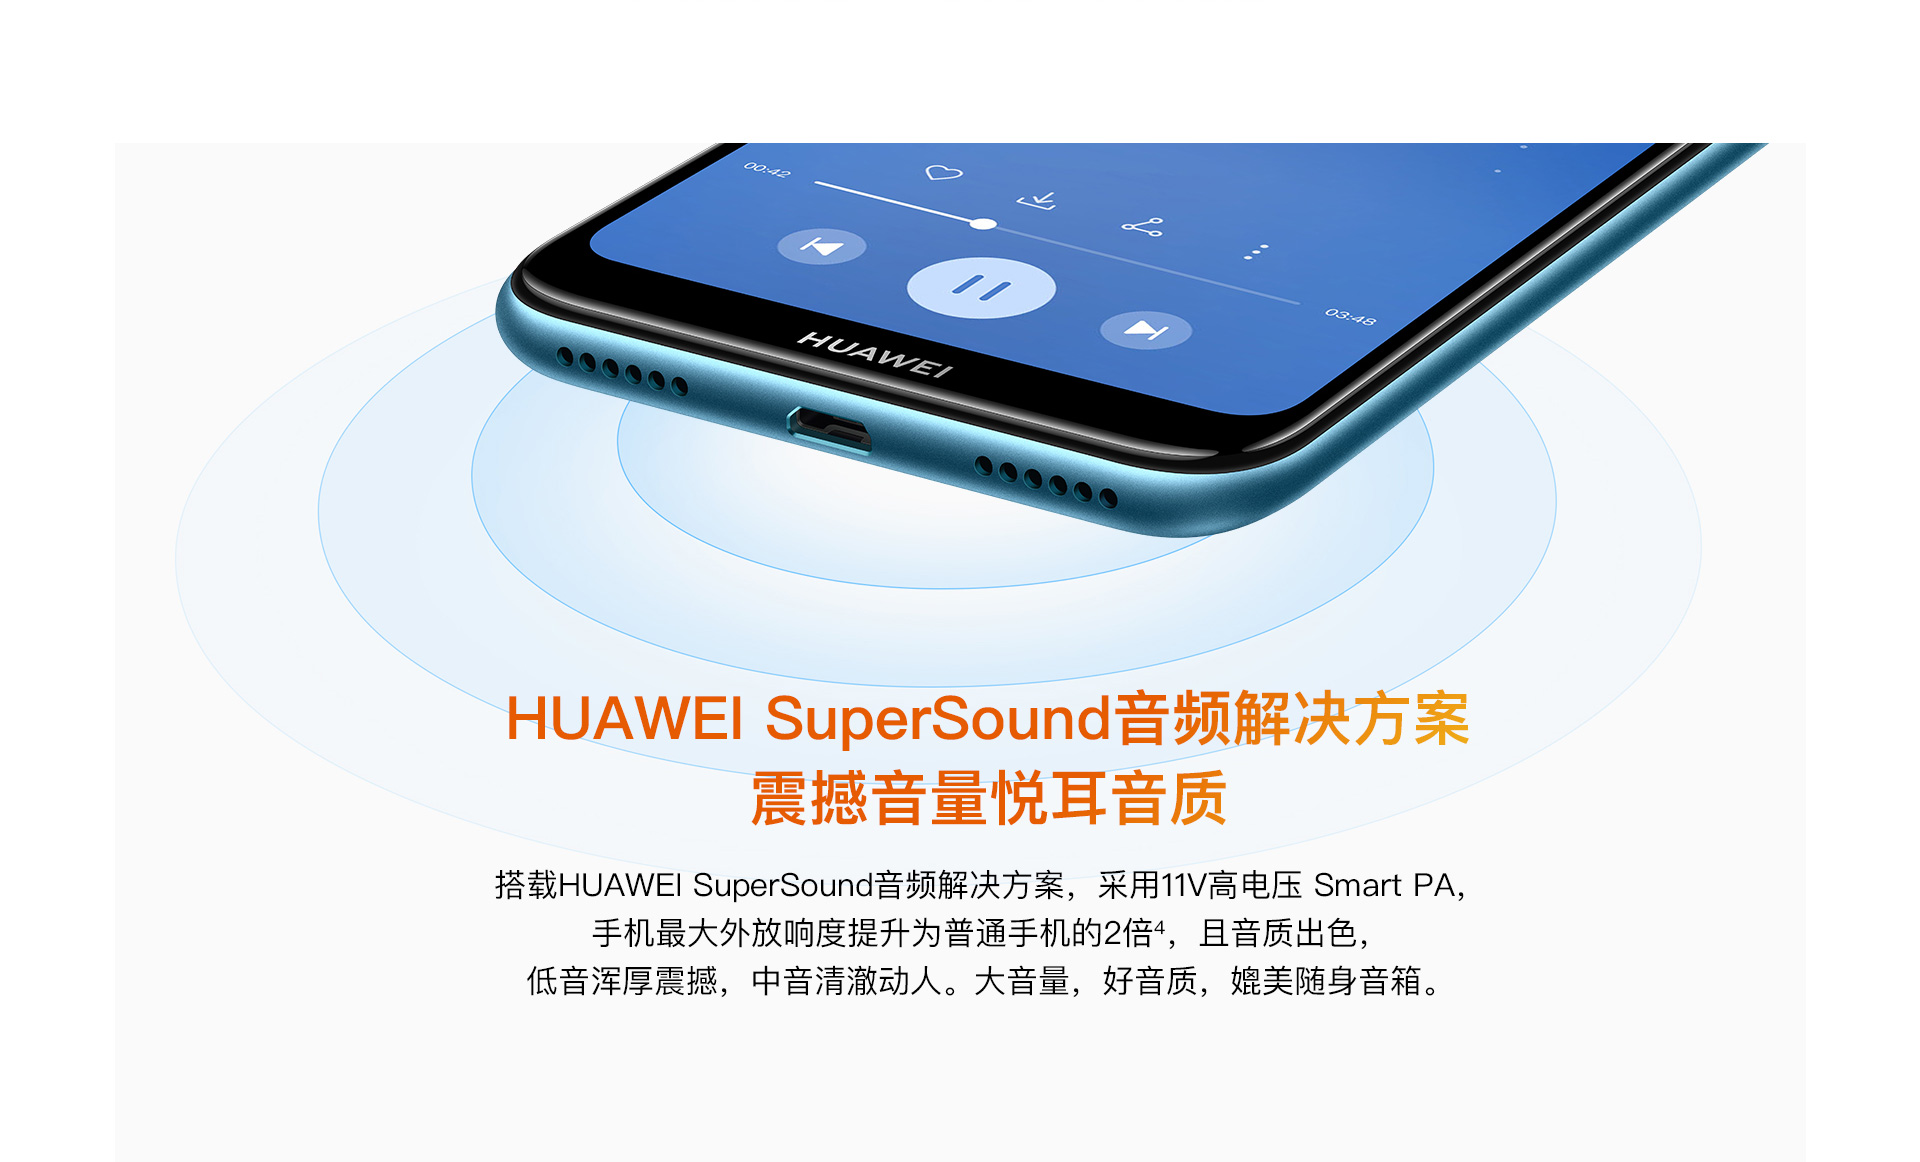 Huawei Enjoy 9e SuperSound technology